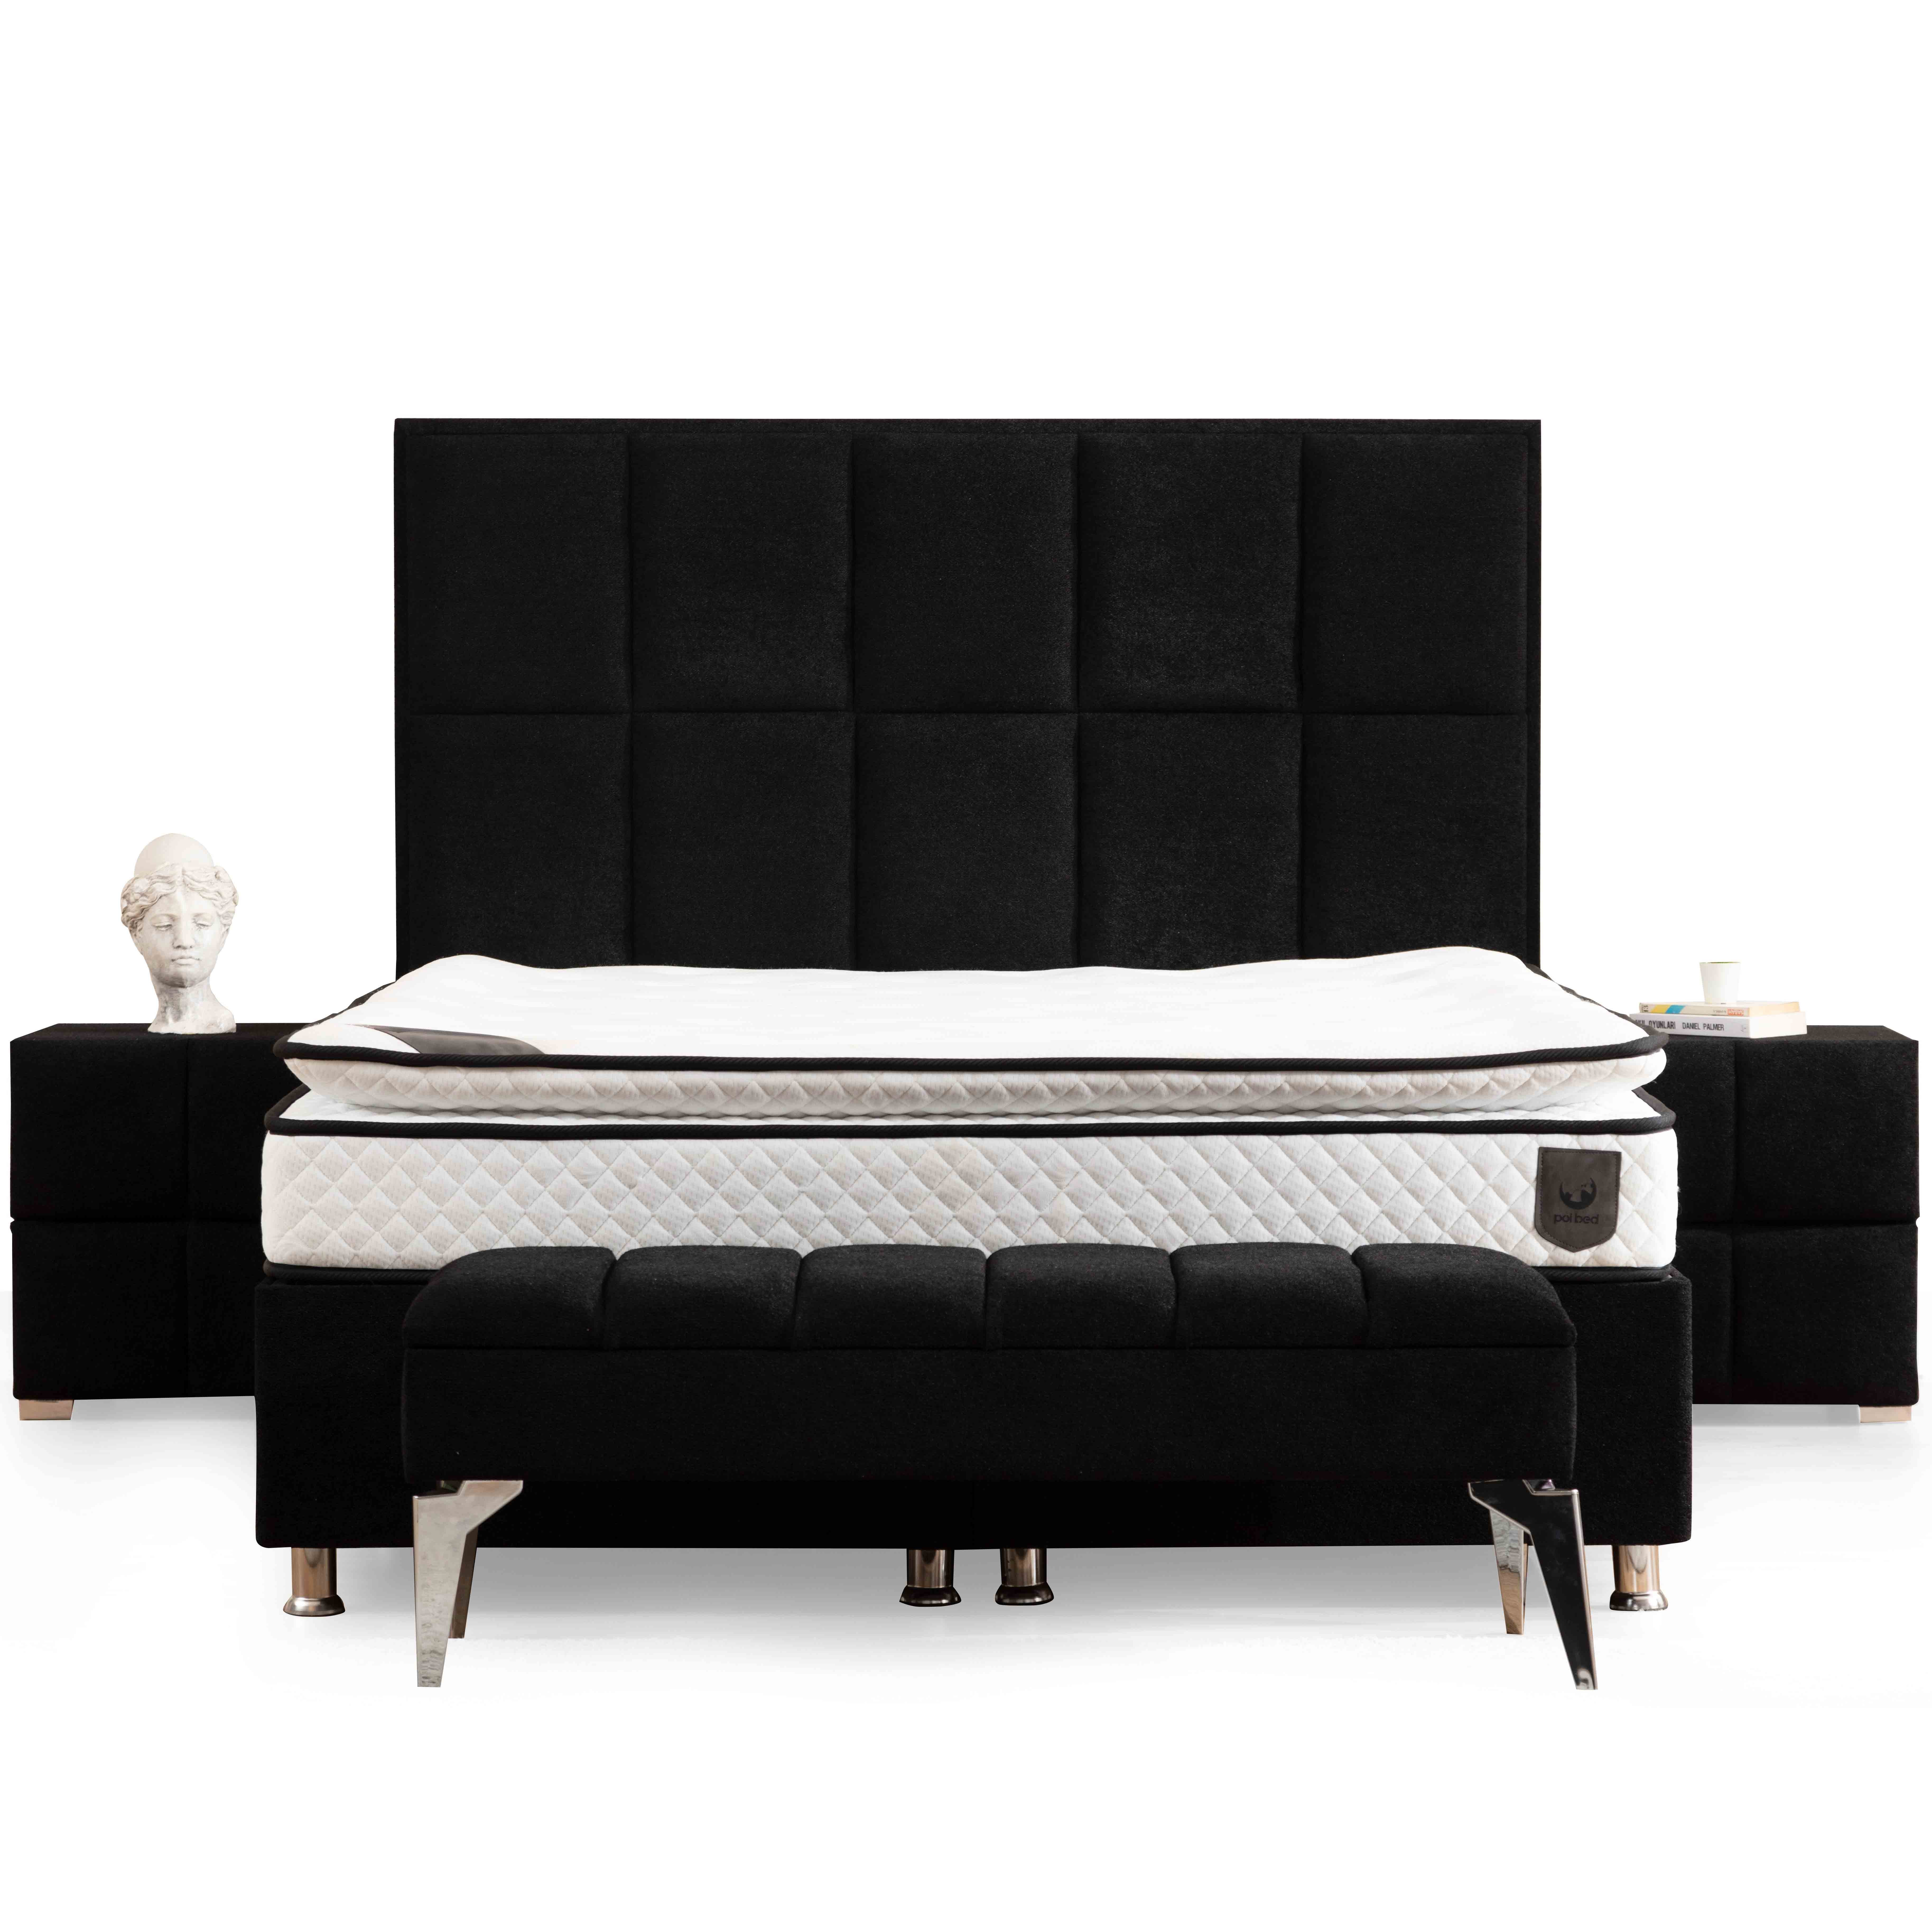 Lovita Bed With Storage 160x200 cm